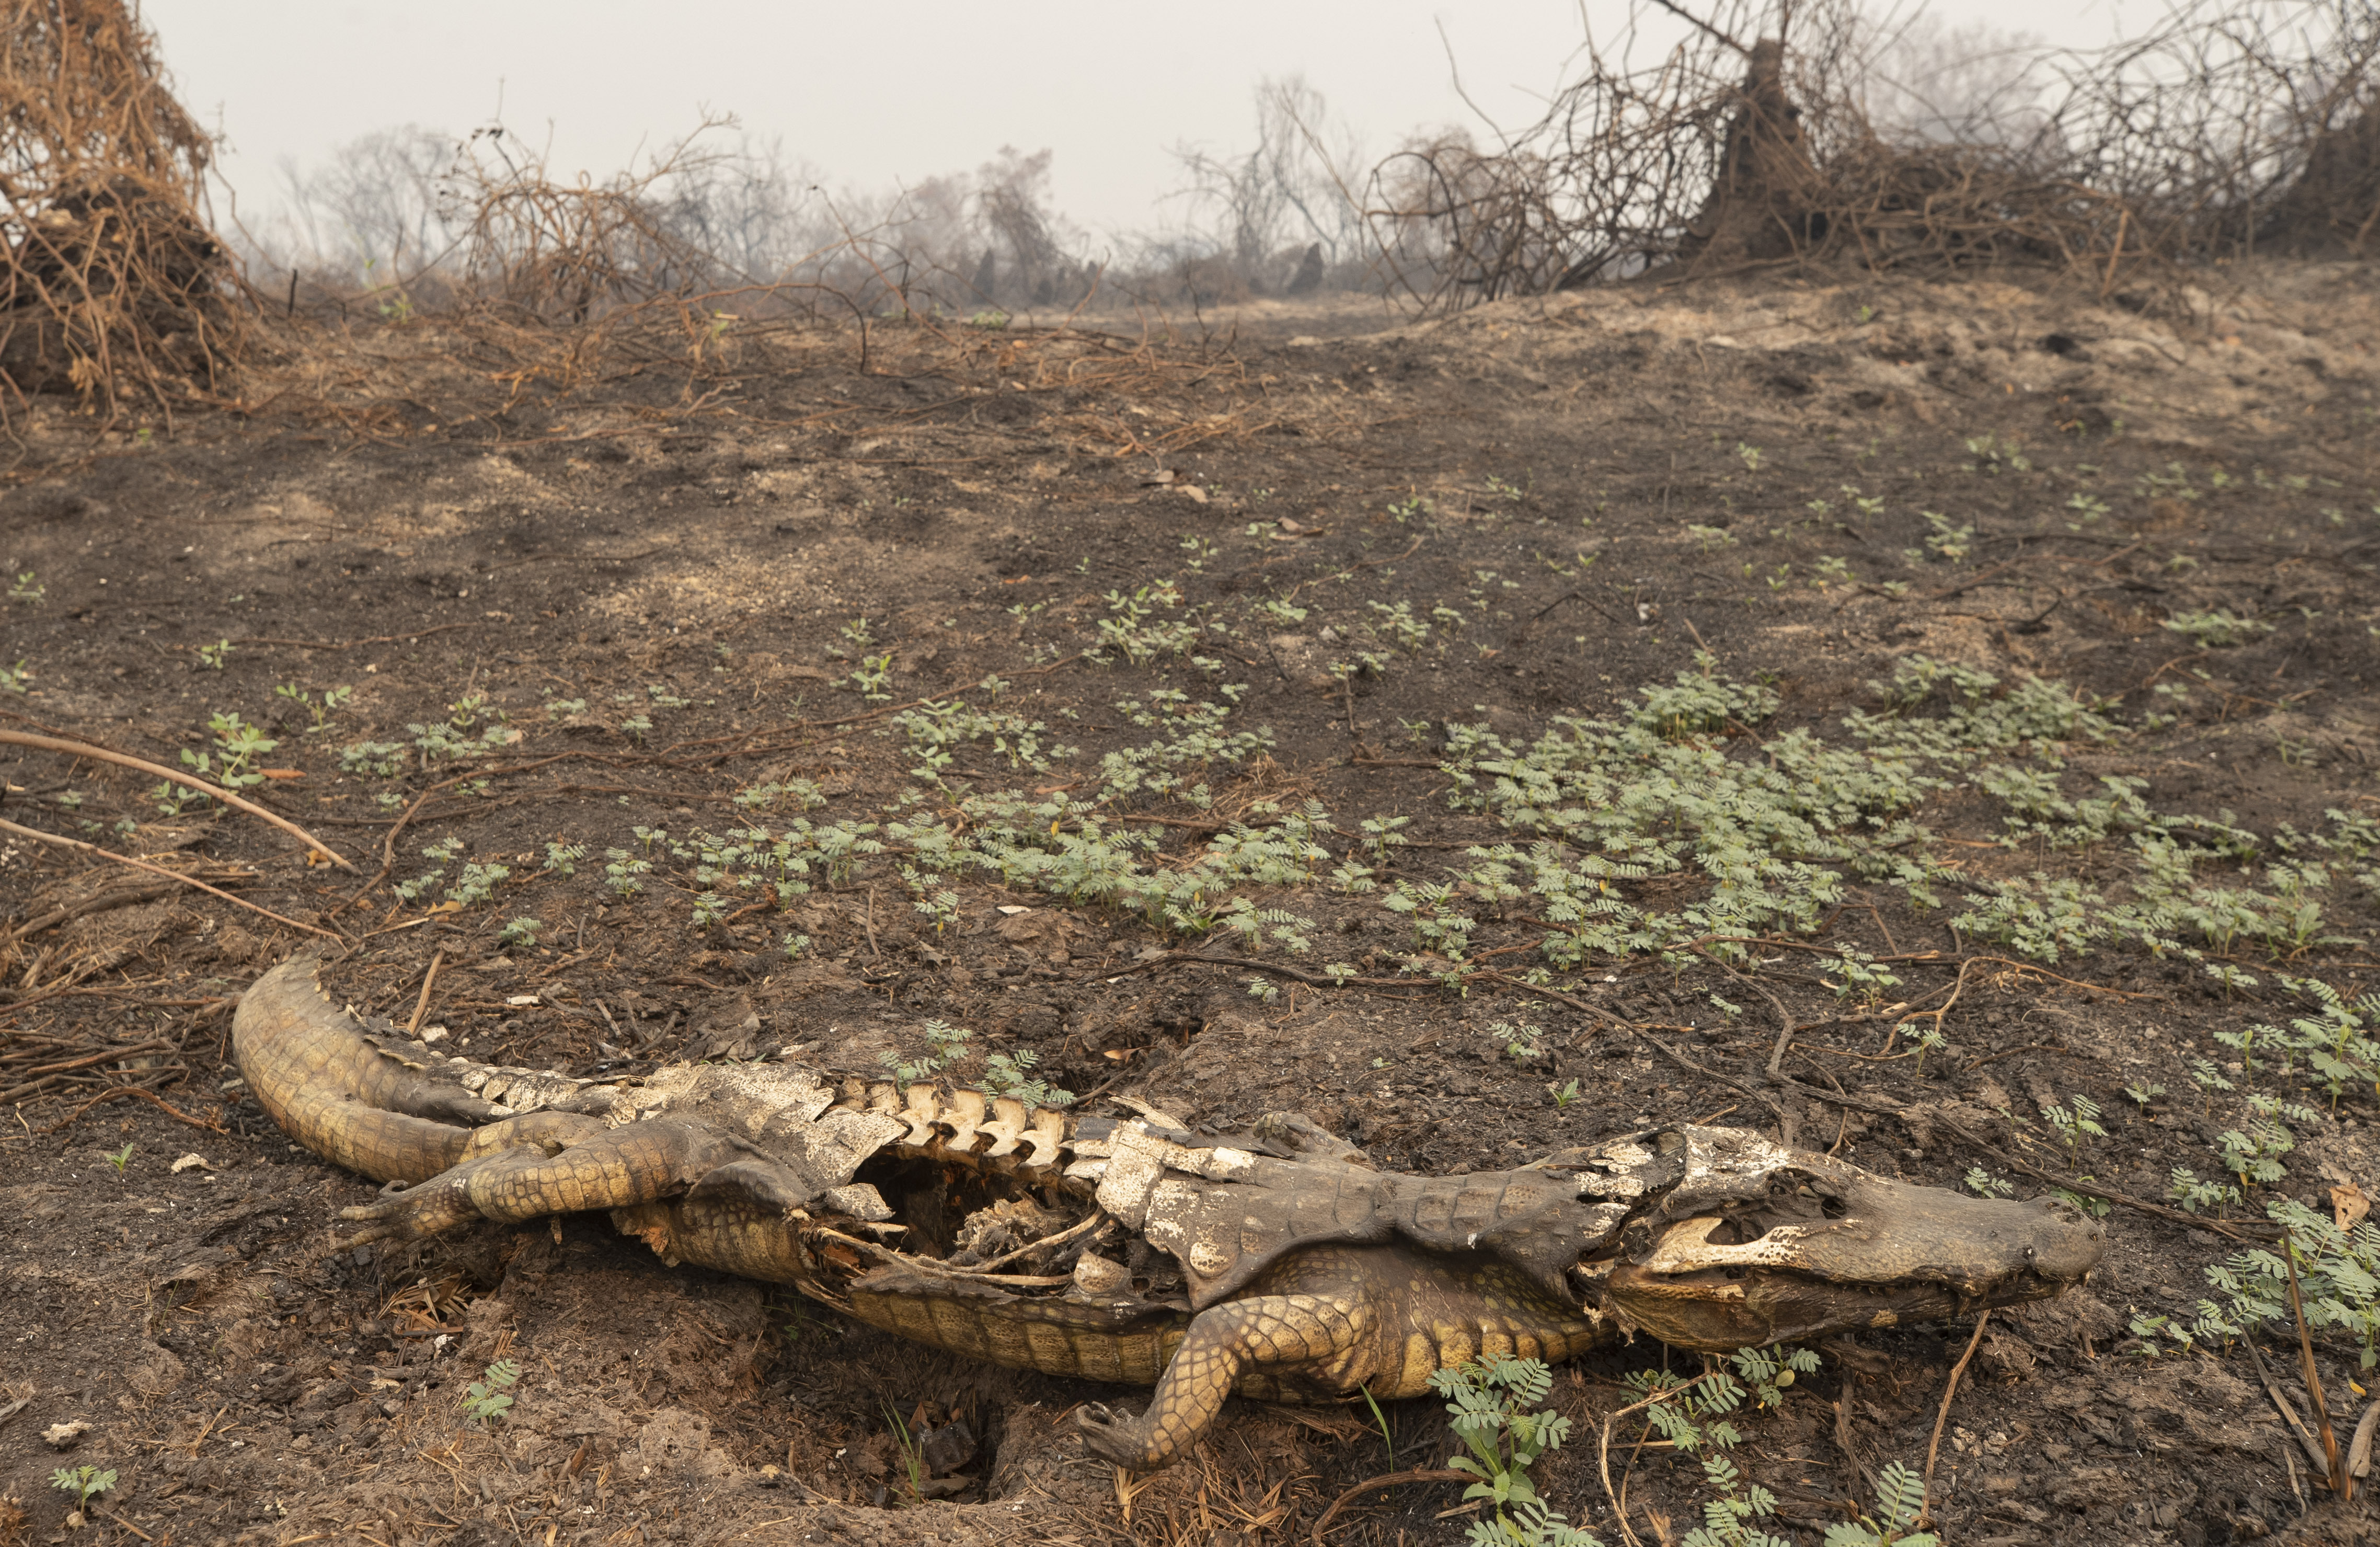 Brazil's horrific blazes kill 200 Jaguars and reptiles